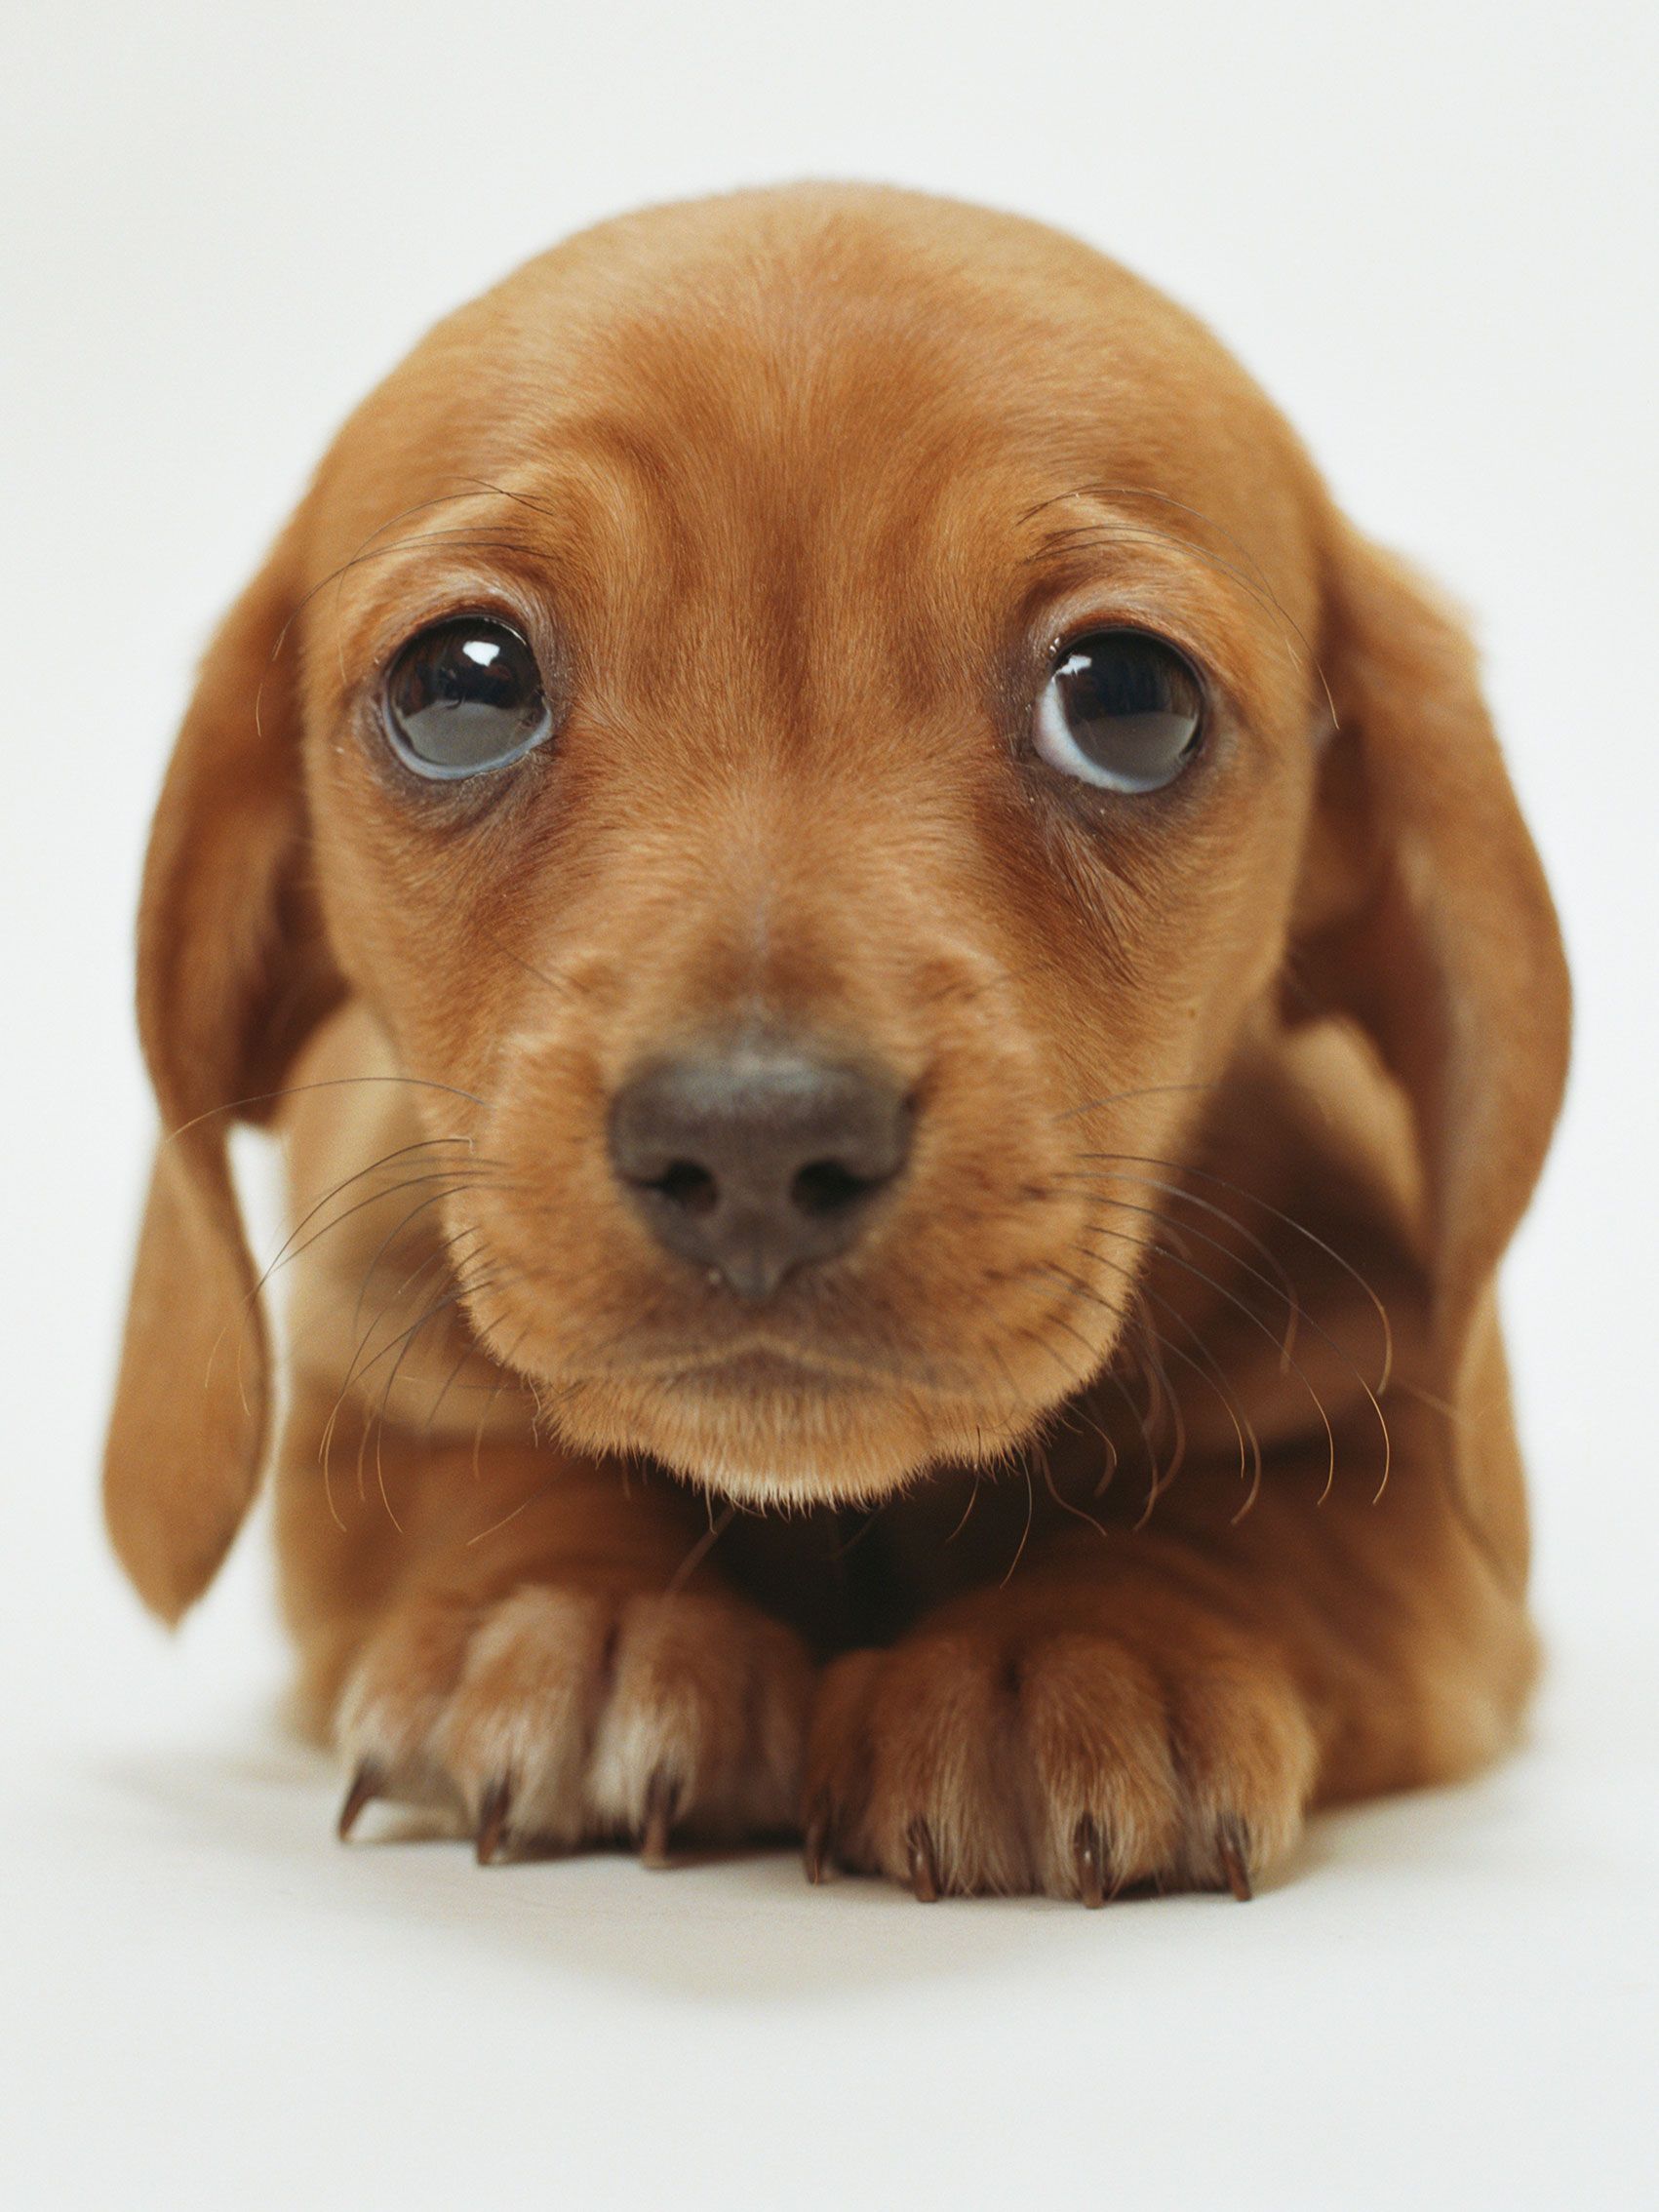 latest (1701×2268). Cute animals, Cute dog photo, Puppies